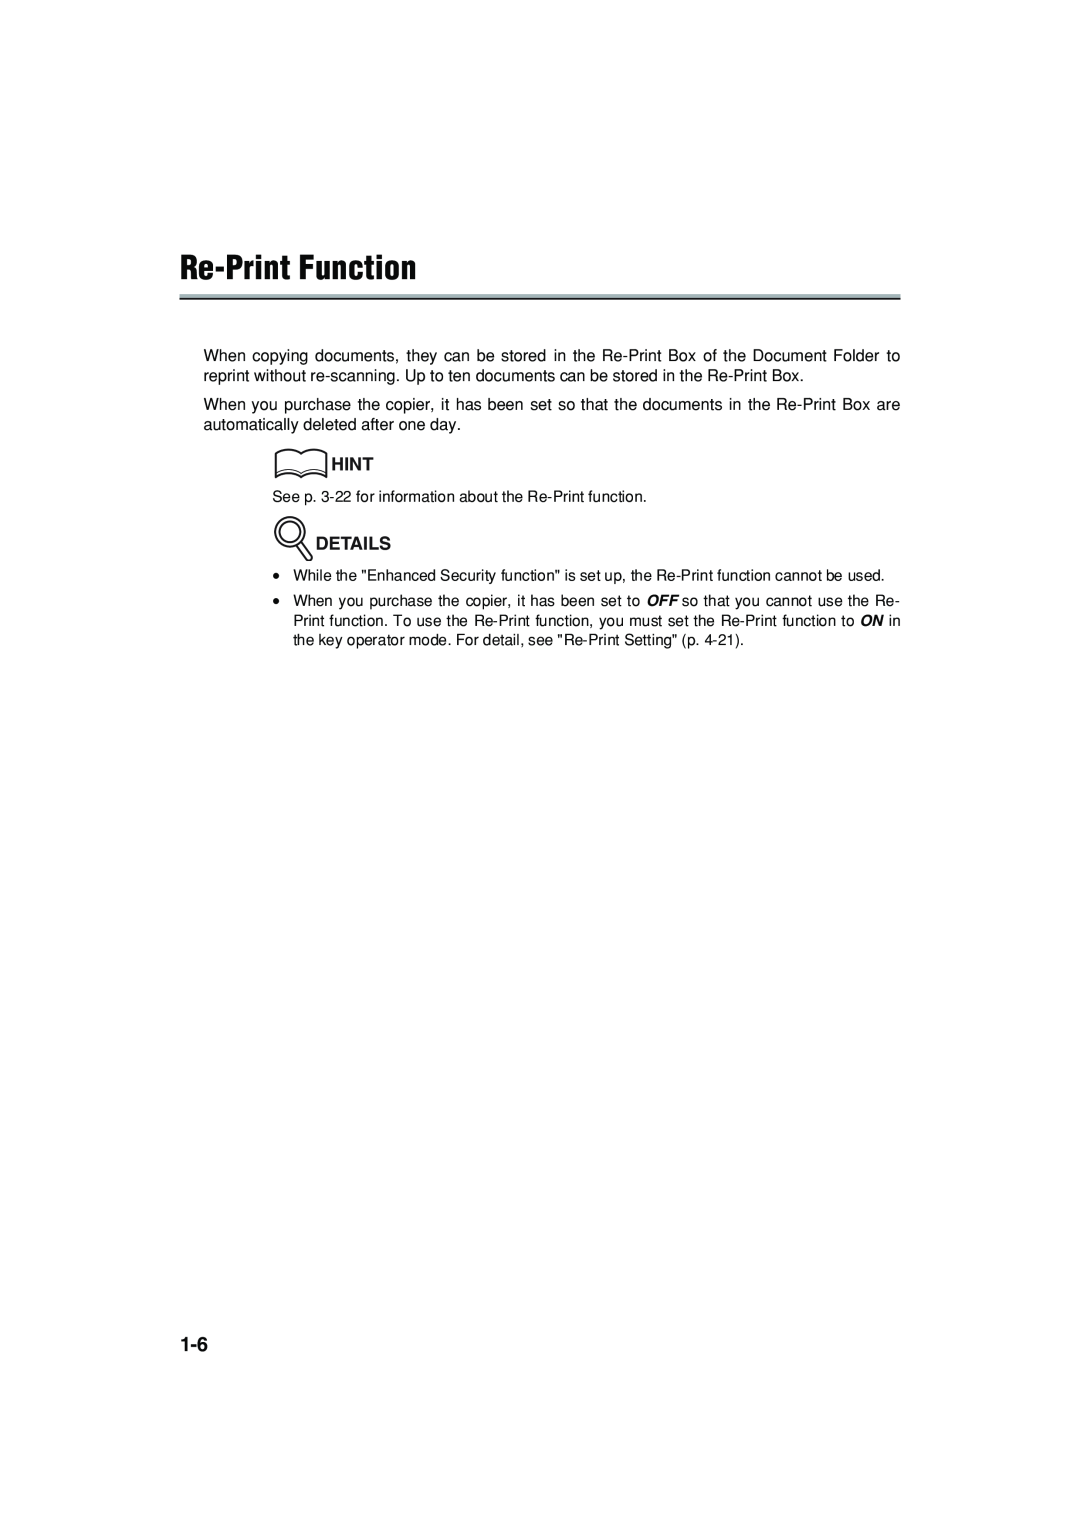 Konica Minolta 7222 manual Re-Print Function, Hint, Details 